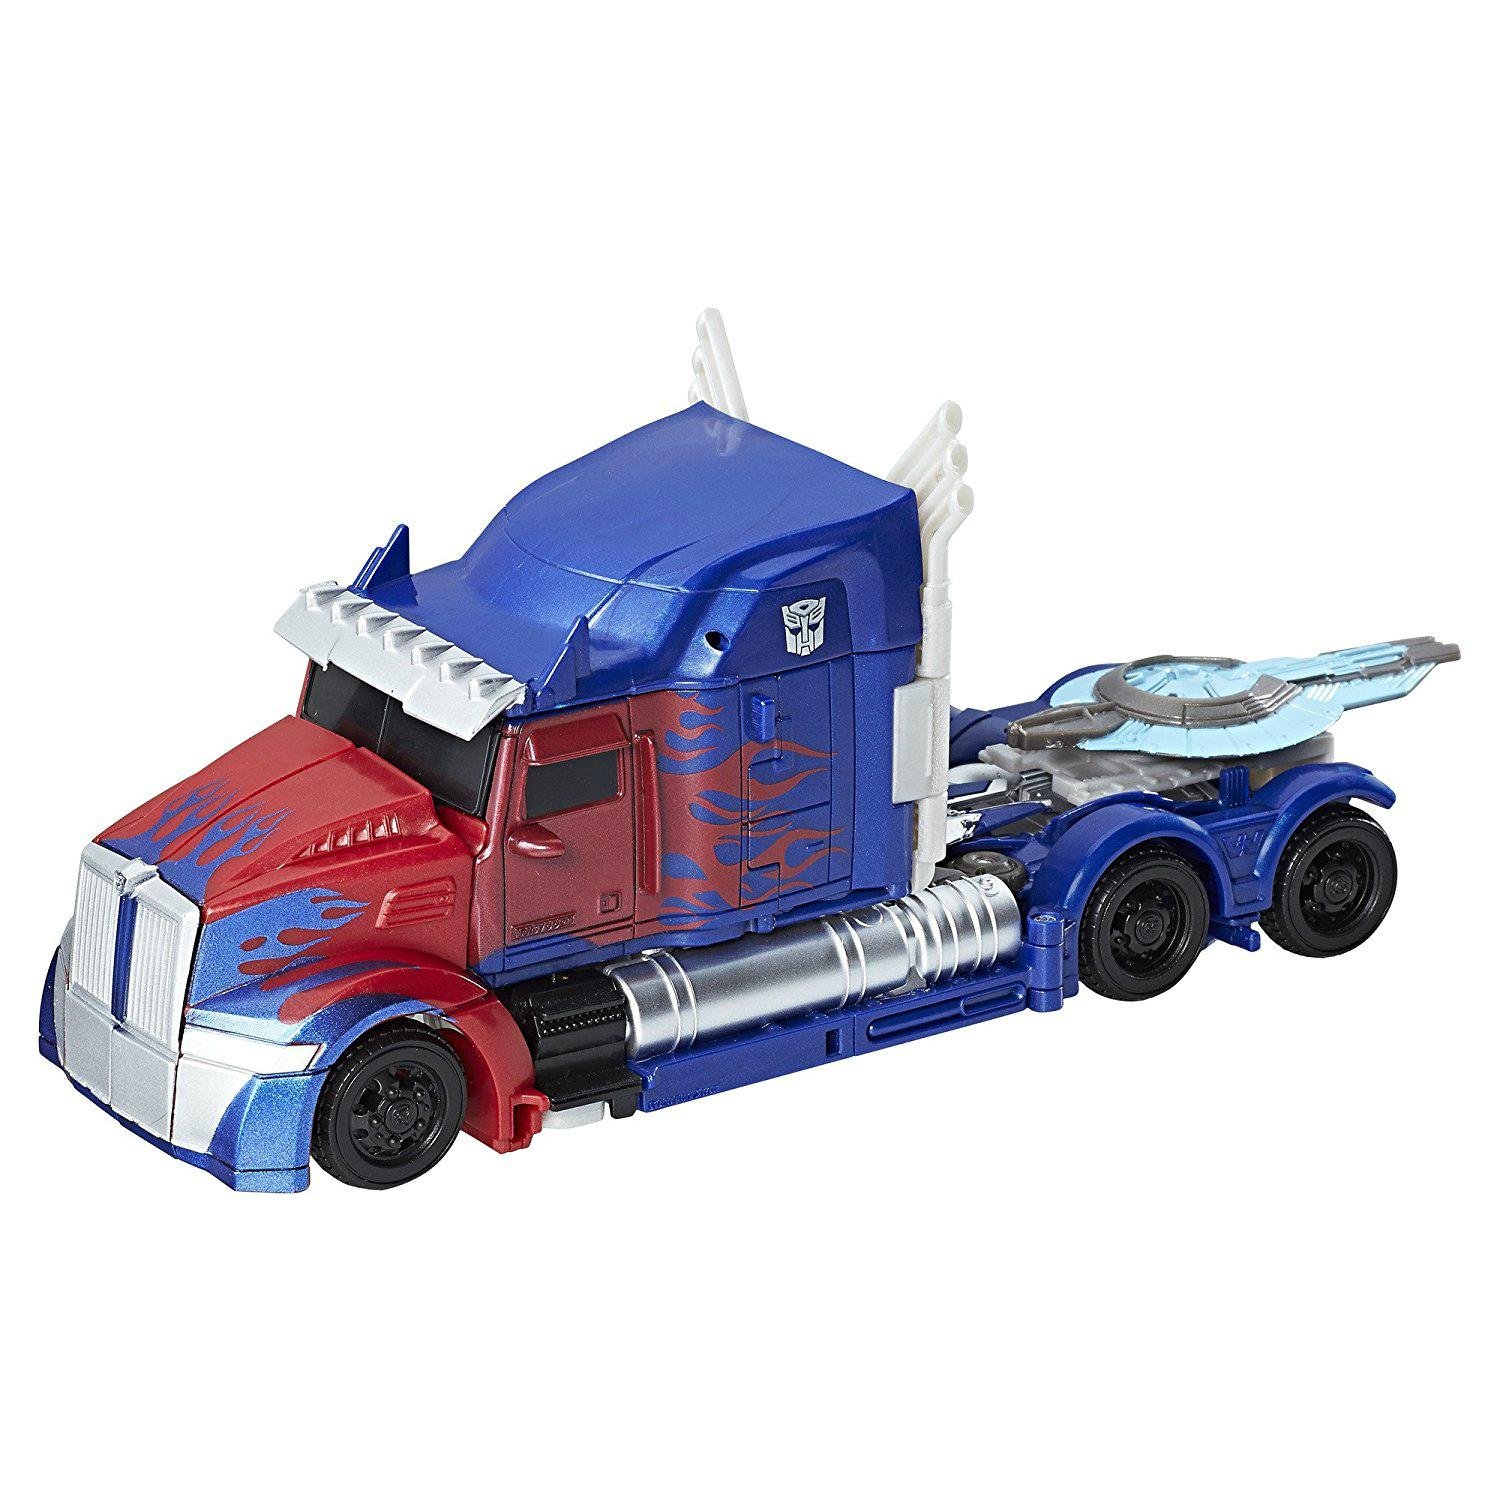 HASBRO Transformers: The Last Knight Premier Edition Voyager Class Optimus Prime 2